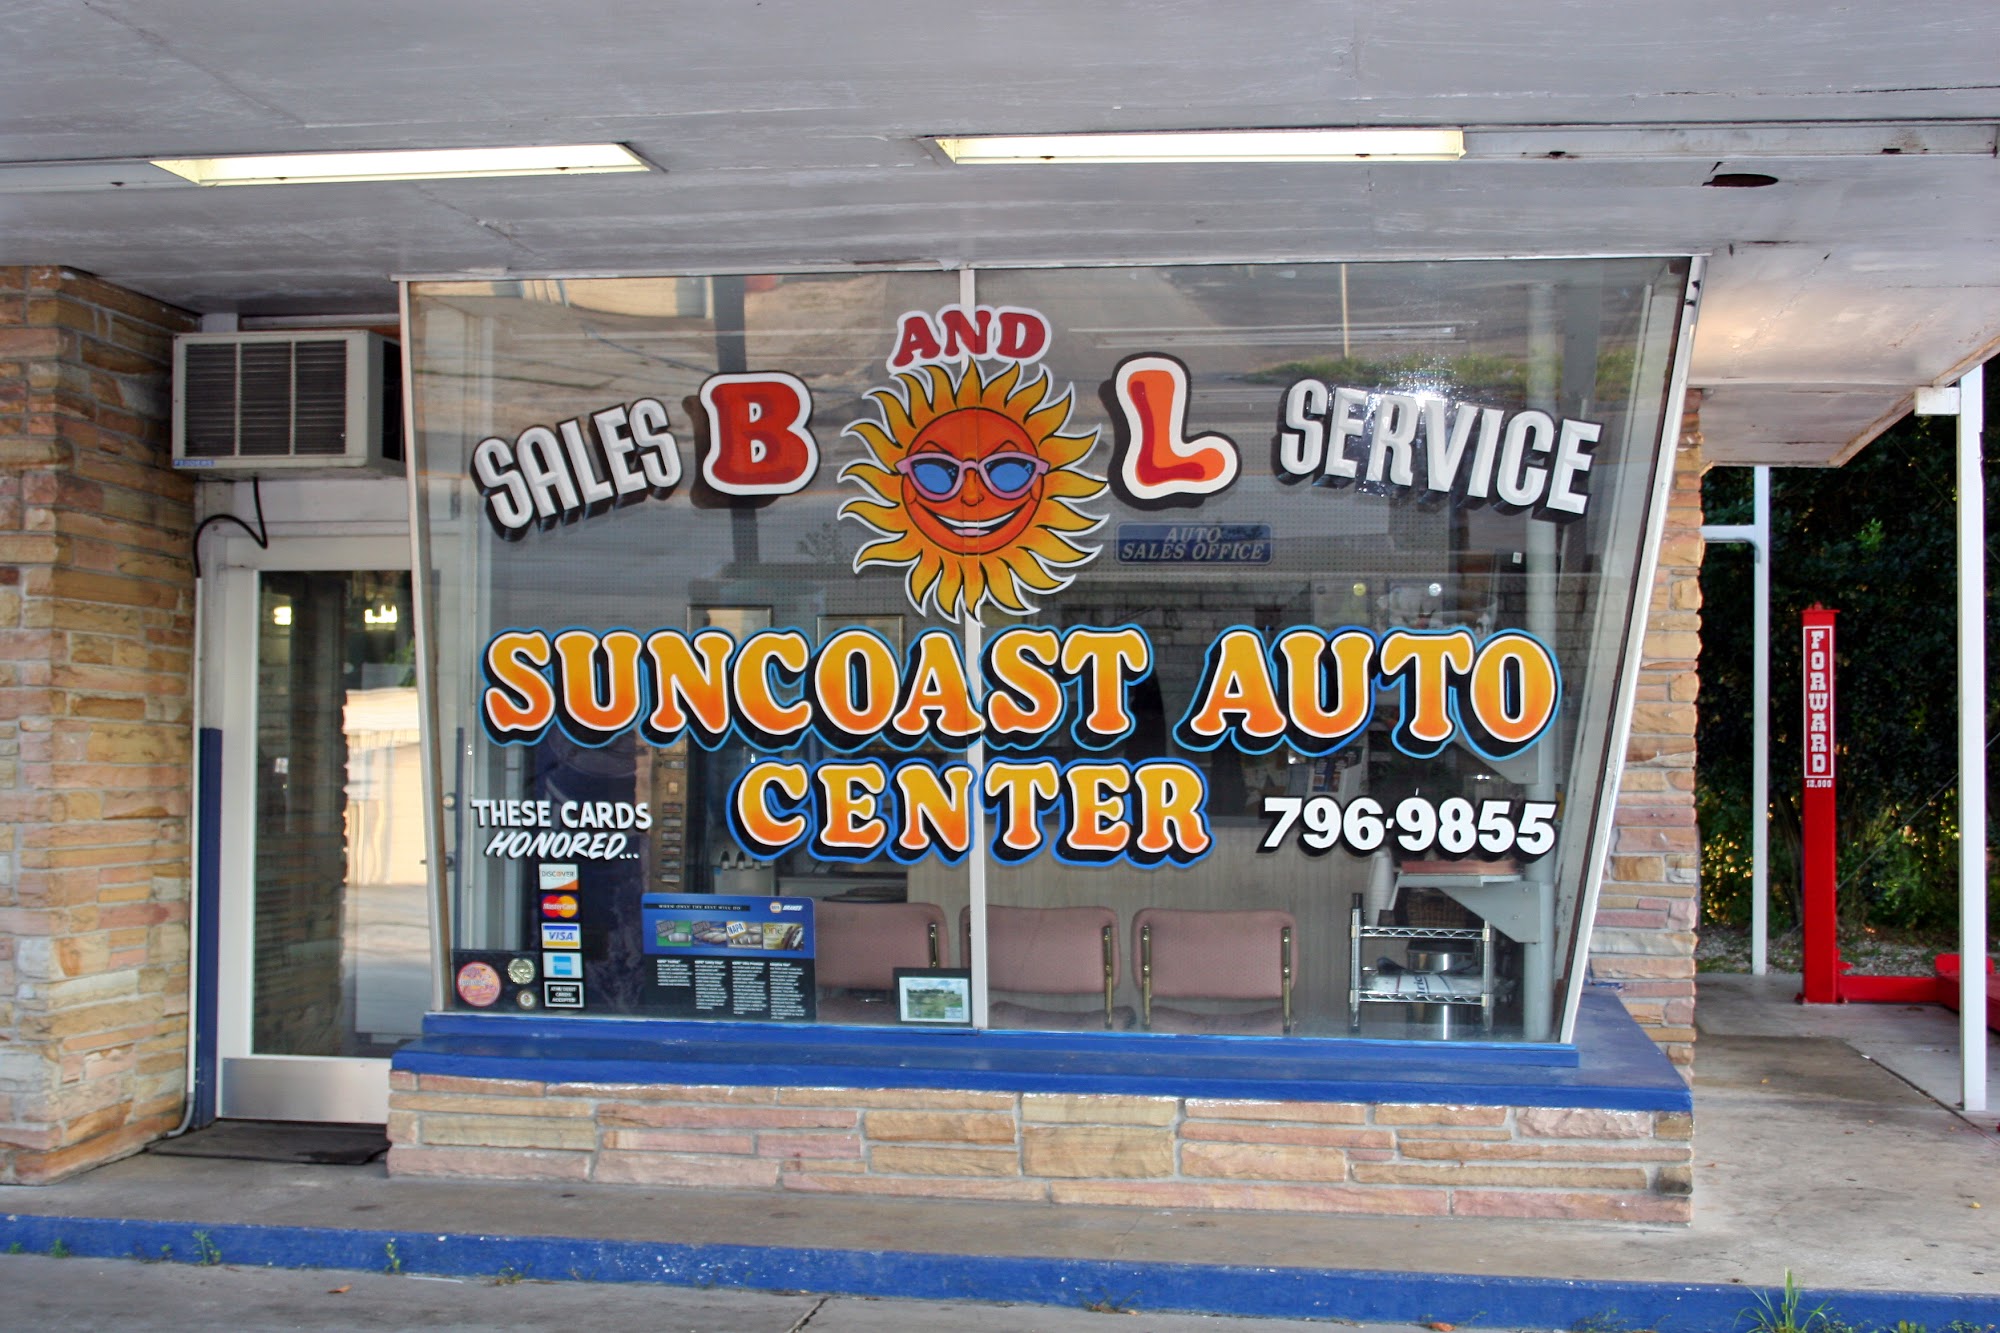 B & L Suncoast Auto Center